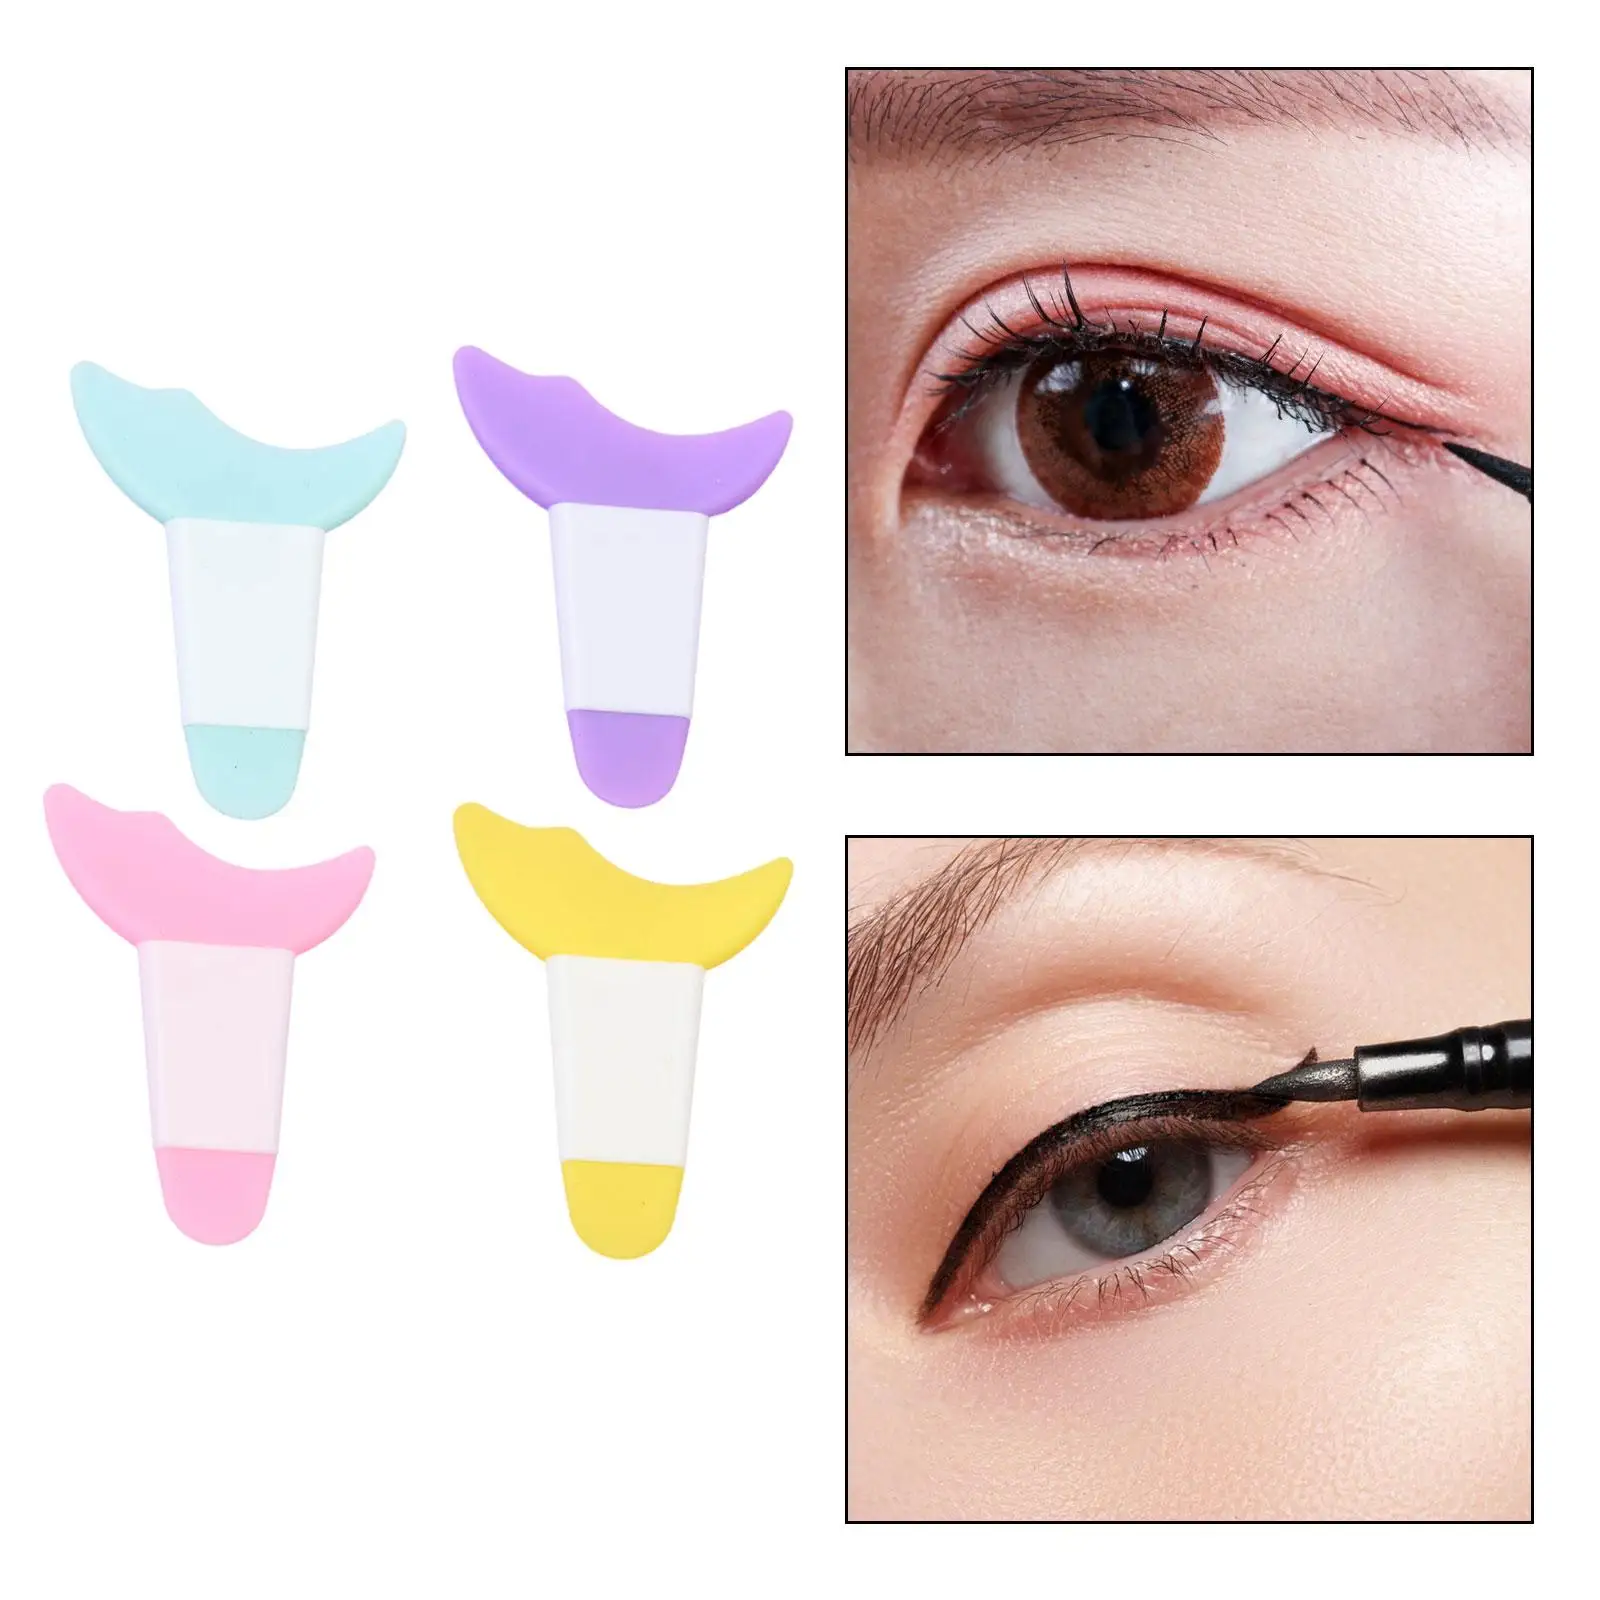 Eye Makeup Stencils Eyeliner Drawing Assistant Easy to Use Eyeliner Tool for Girls Ladies Women Beginners Eyebrow